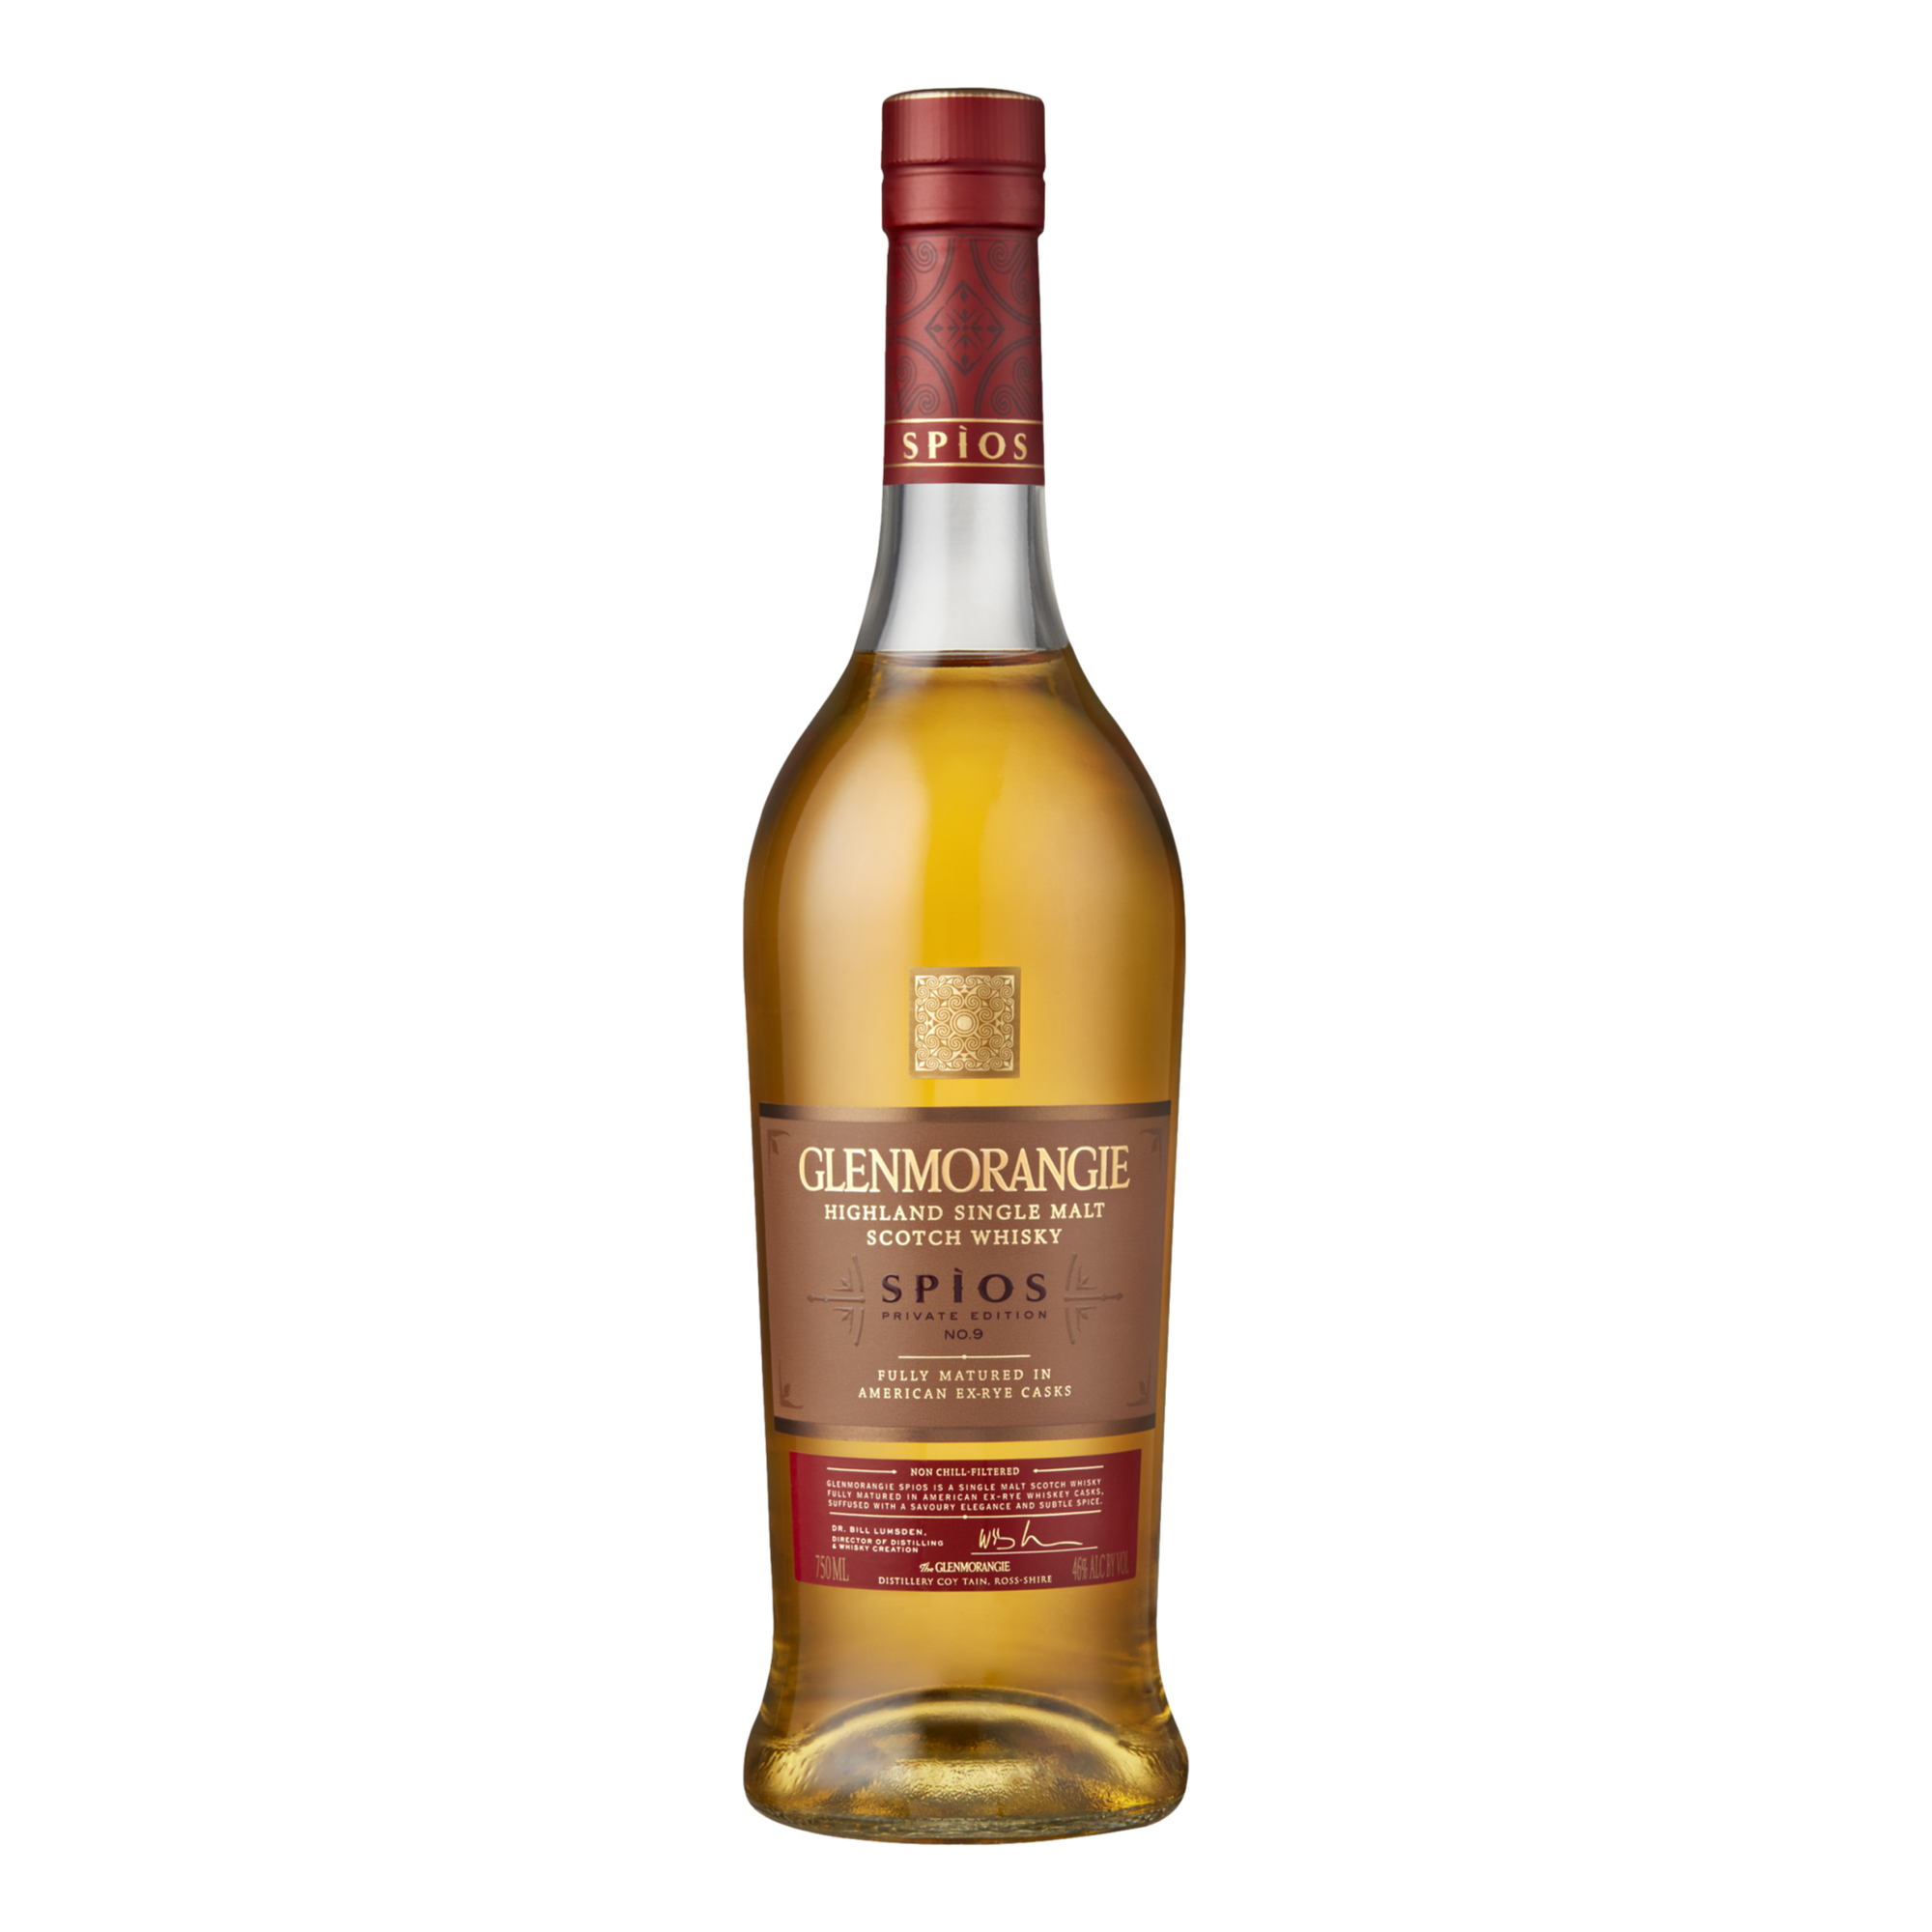 Glenmorangie Original Single Malt Scotch Whisky Spios 700ml - Limited Edition